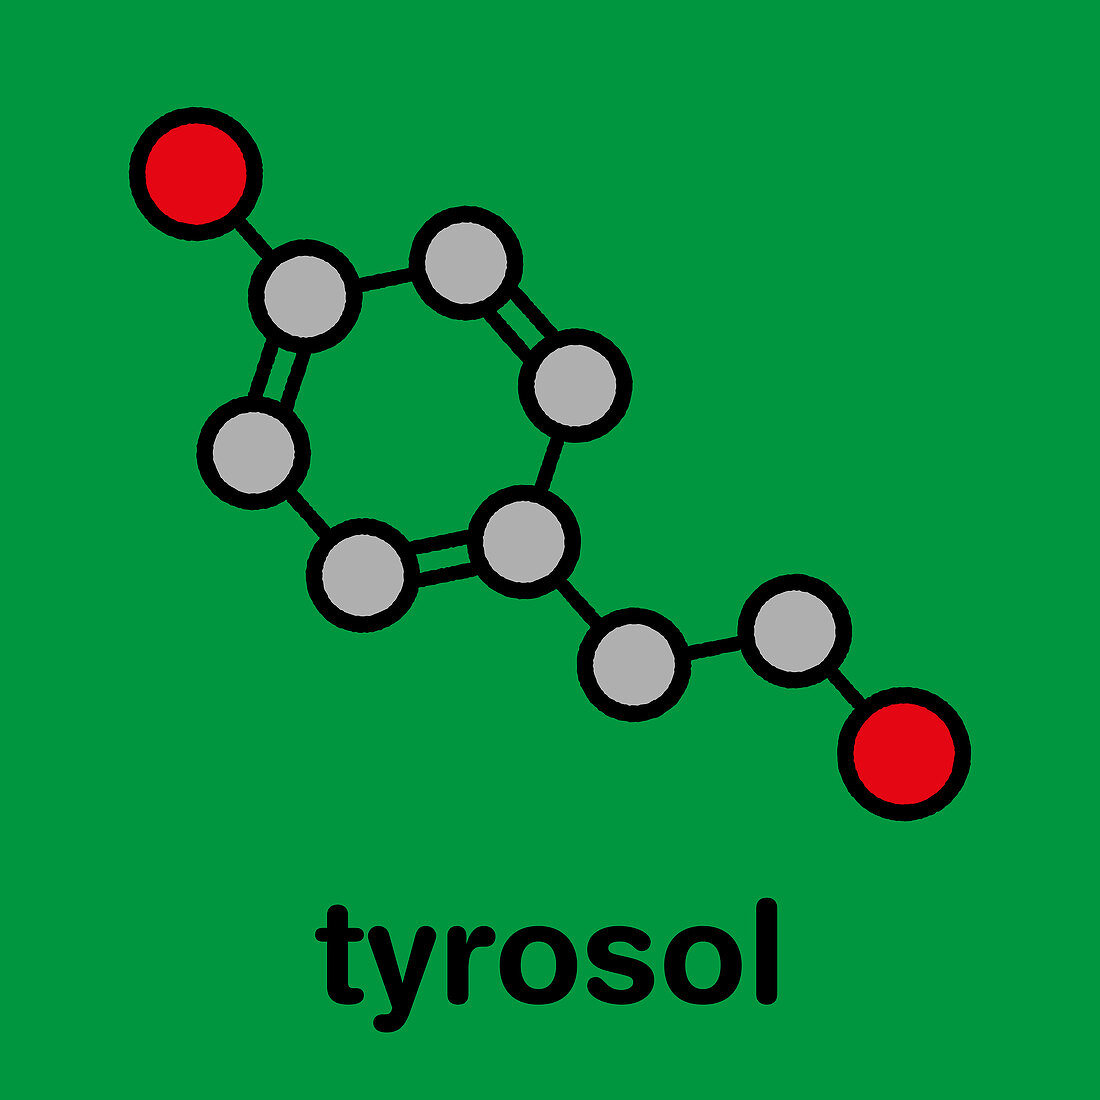 Tyrosol molecule, illustration